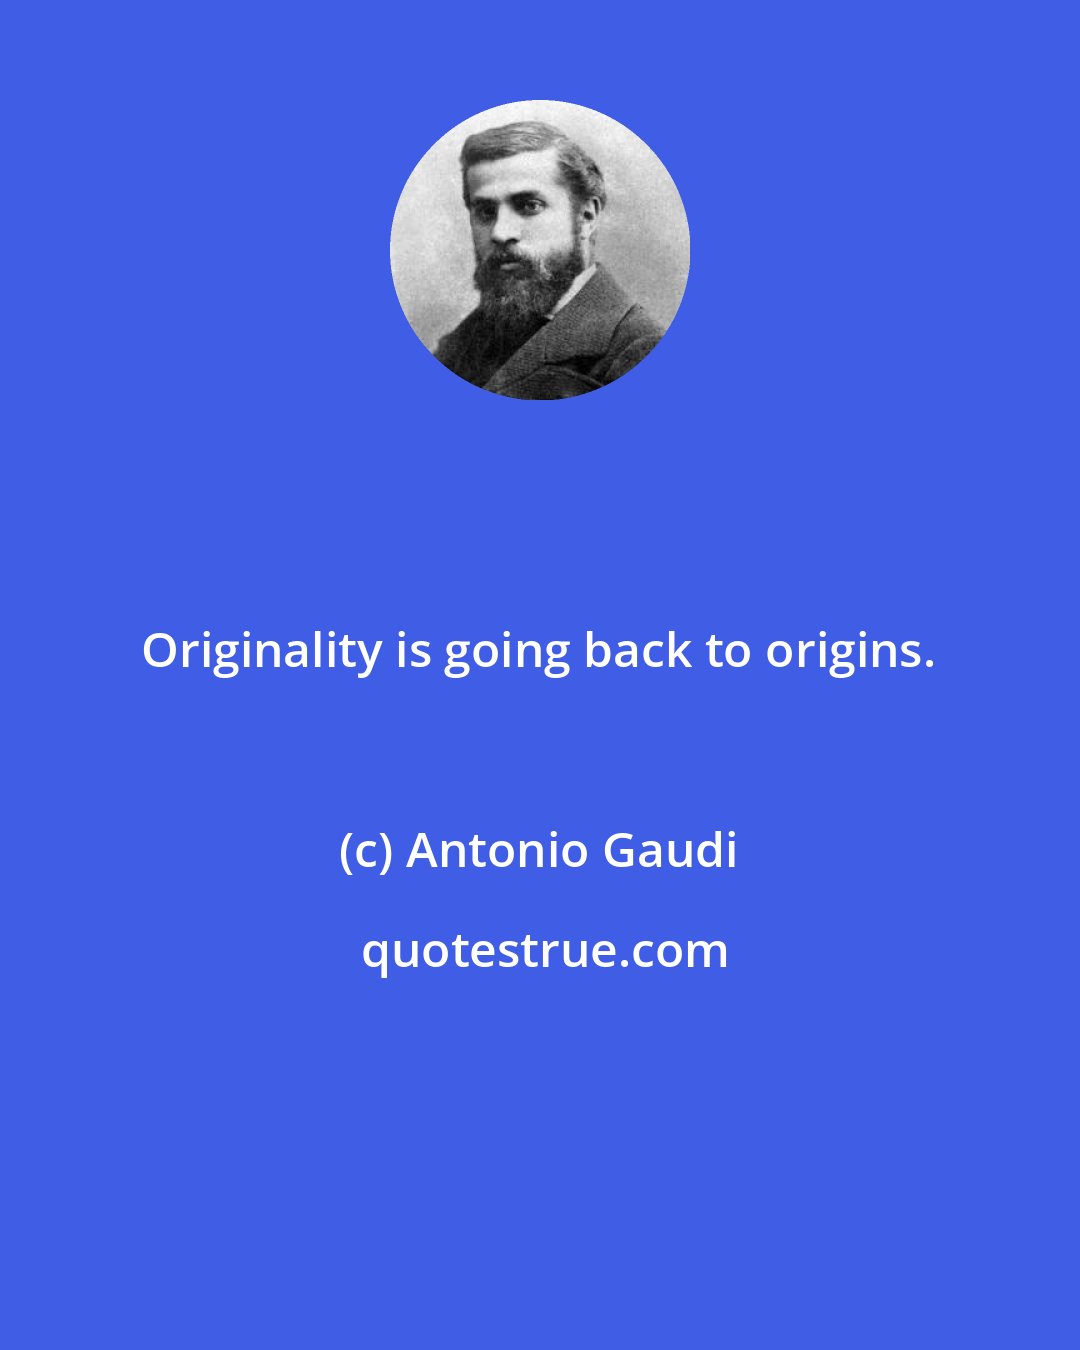 Antonio Gaudi: Originality is going back to origins.